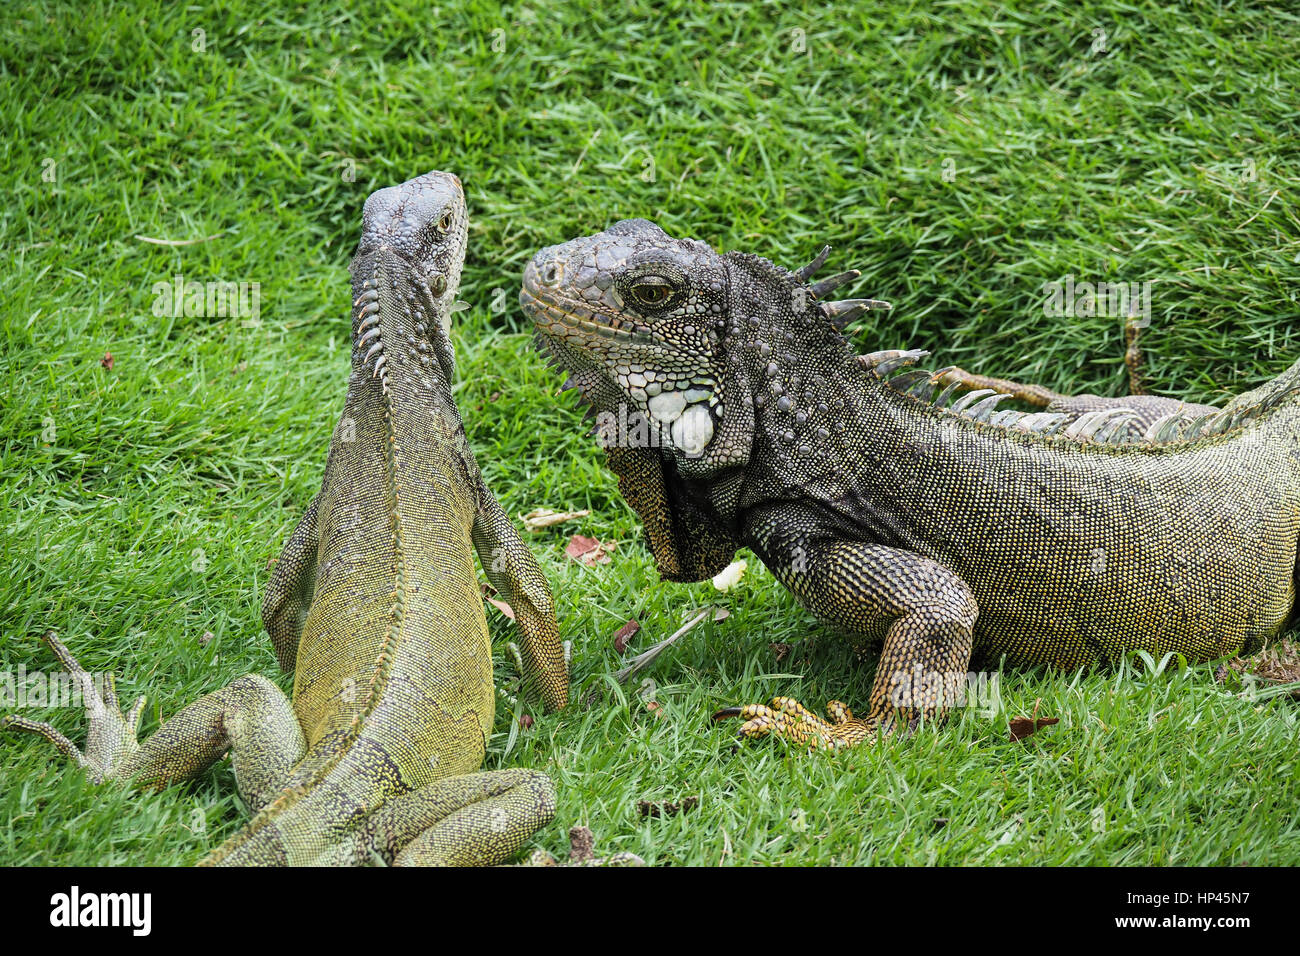 Iguanas in Iguana Park, Guayaquil Stock Photo